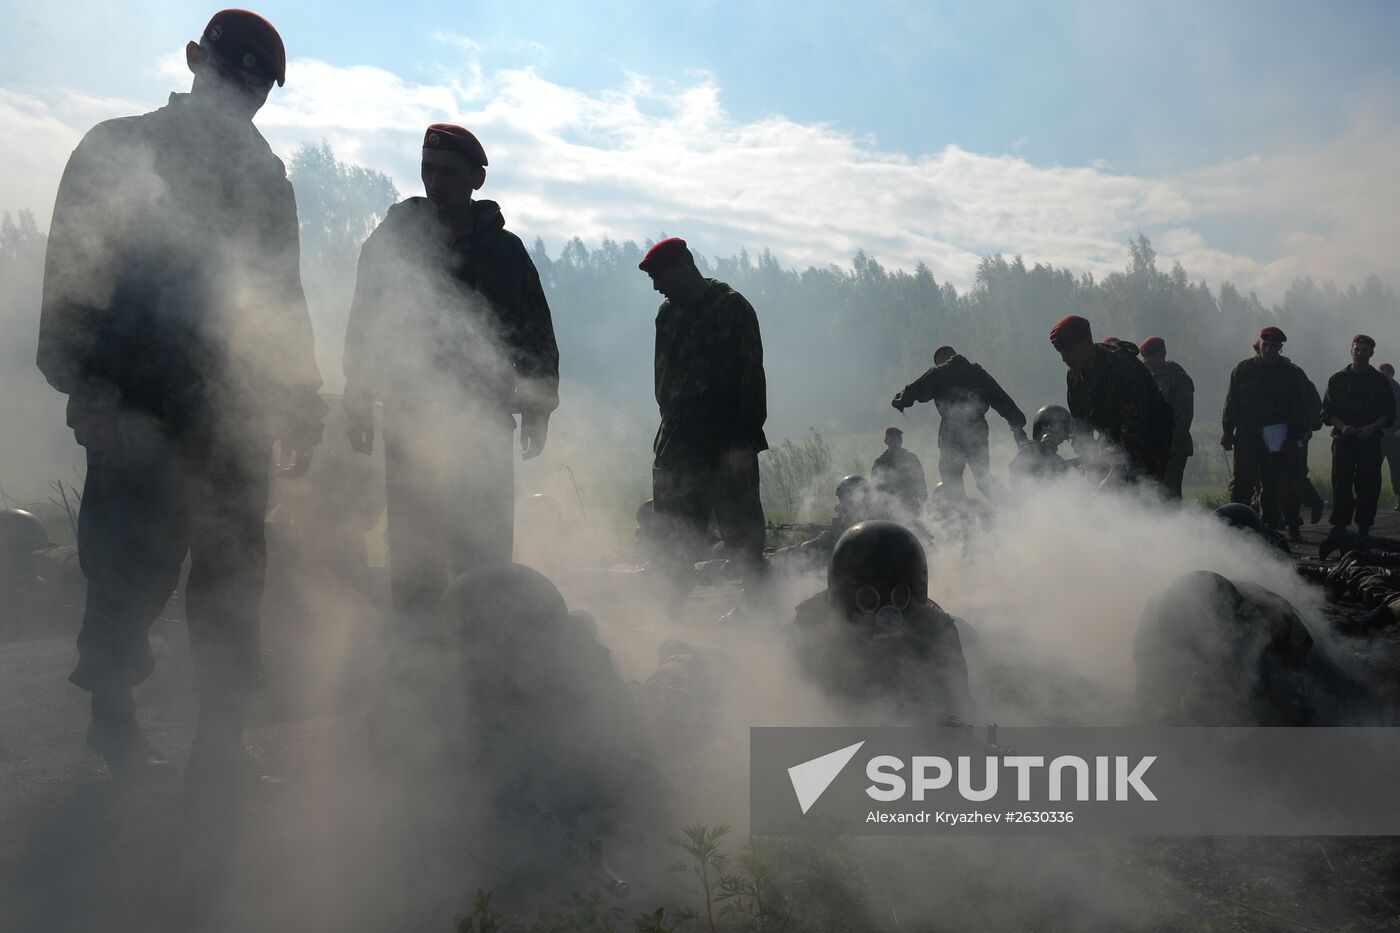 Personnel take maroon beret exam in Novosibirsk